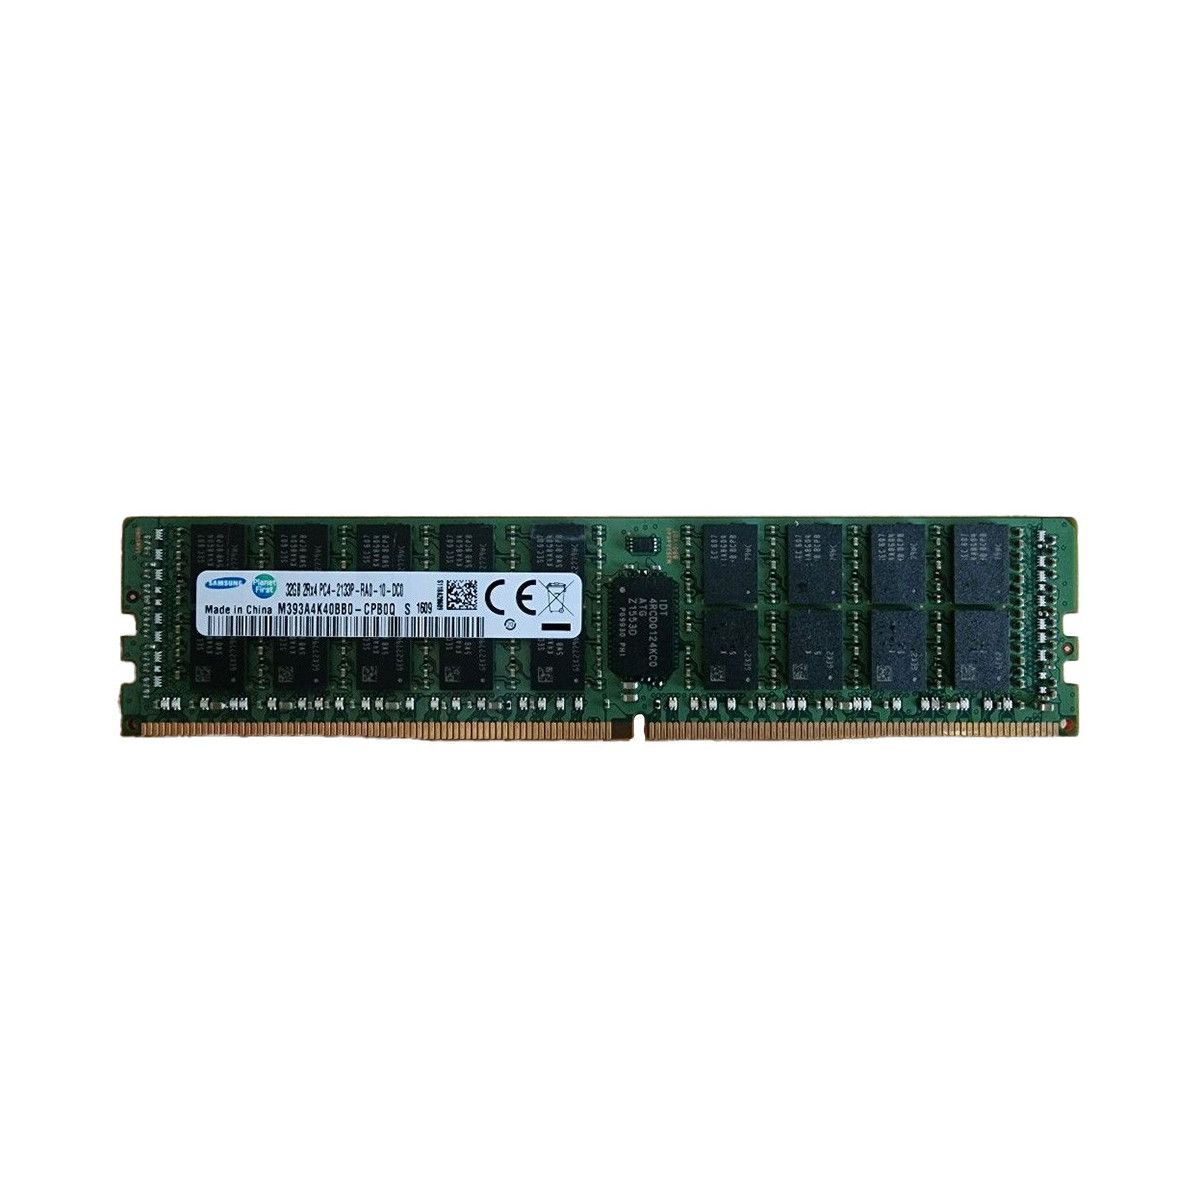 728629-B21-MS - Memstar 1x 32GB DDR4-2133 RDIMM PC4-17000P-R - Memorie OEM compatibilă Mem-Star 1 - Memstar 